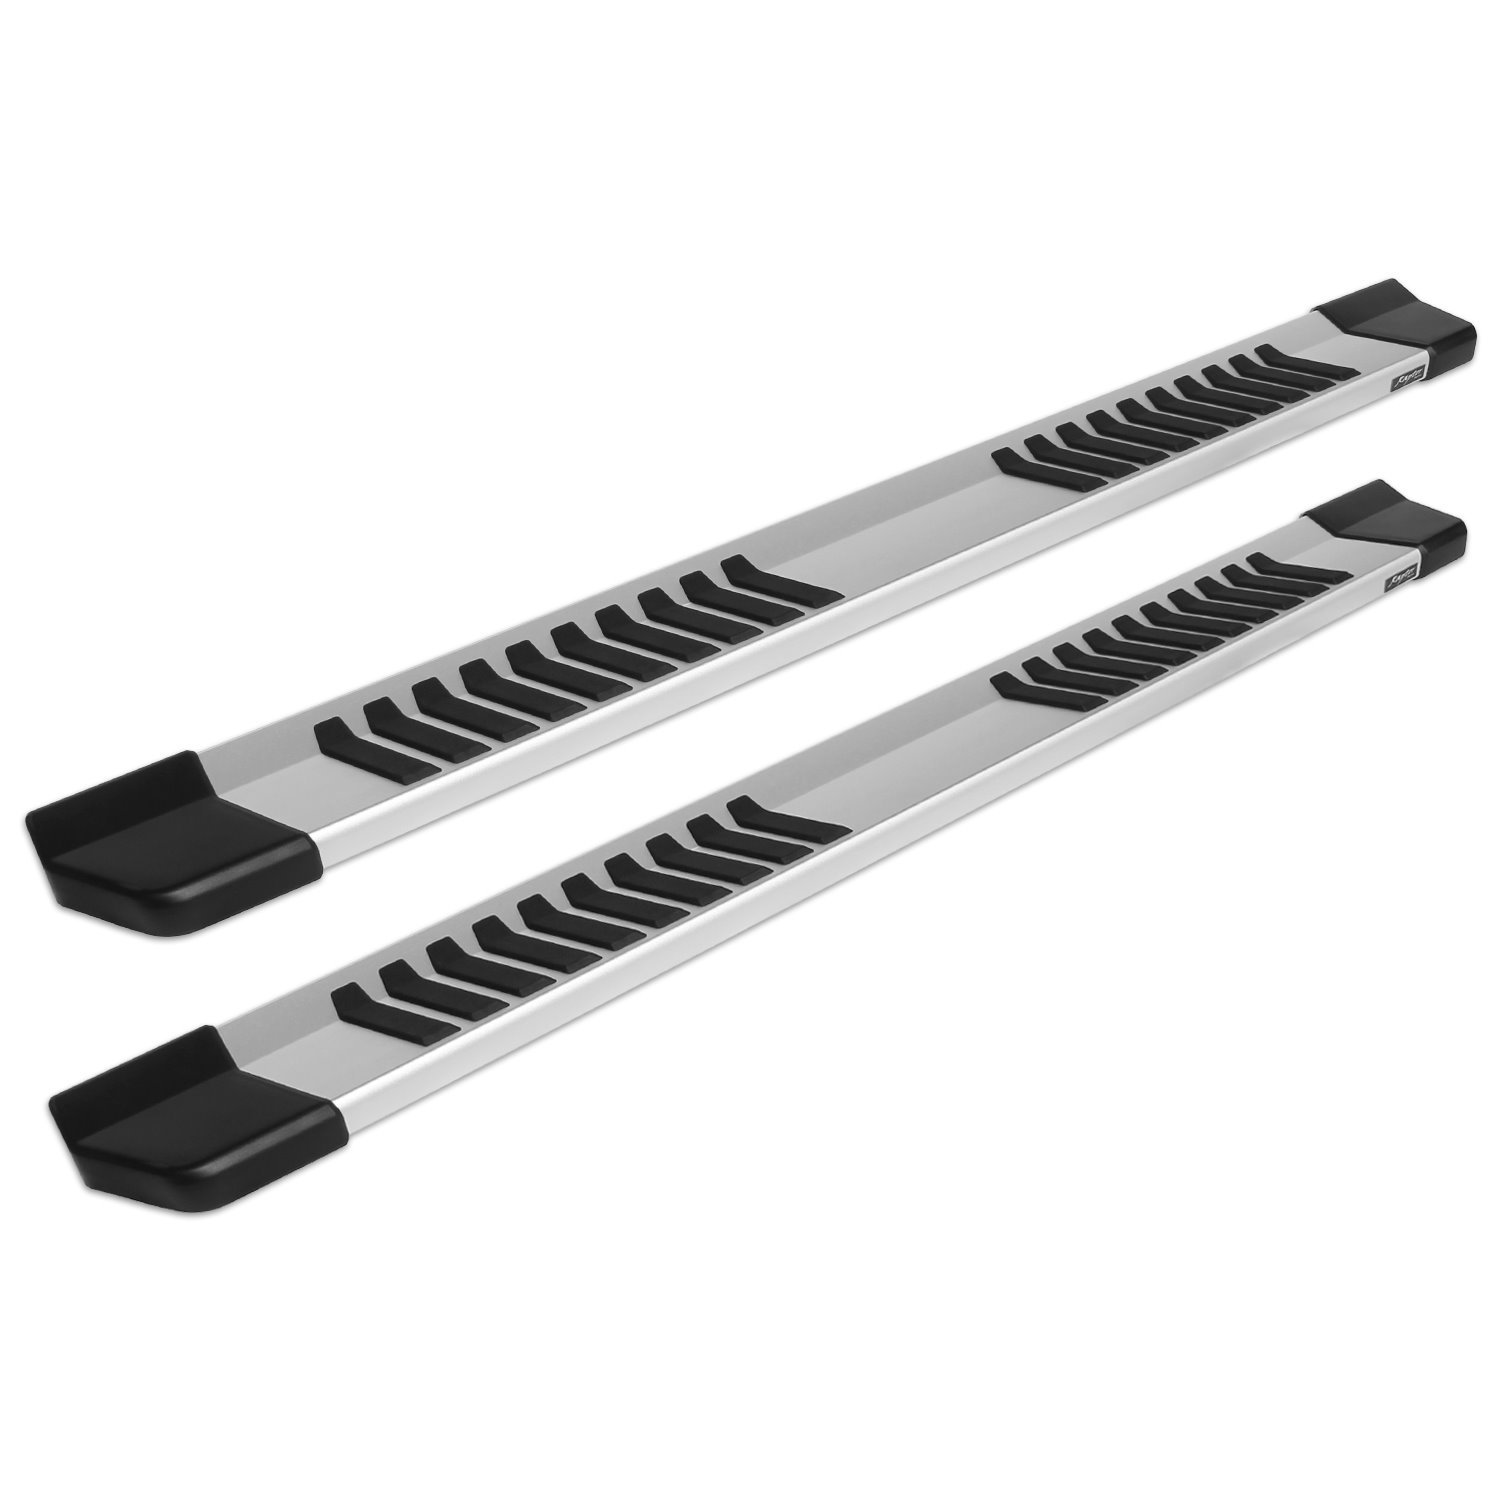 1701-0052 6 in OEM Style Slide Track Running Boards, Brushed Aluminum, Fits Select Silverado/Sierra 1500/2500/3500